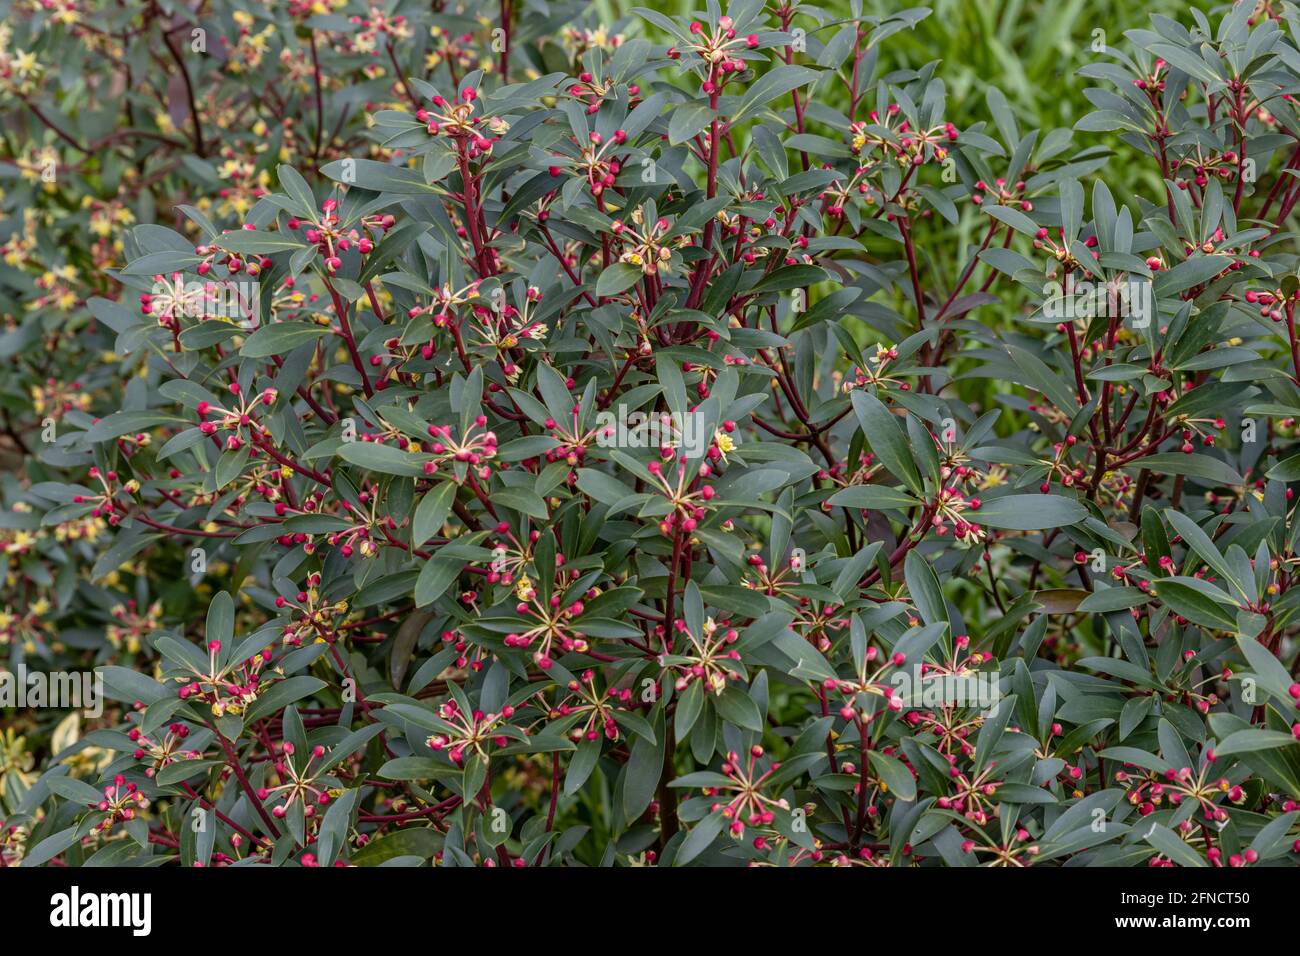 Tasmannia lanceolata Red Spice shrub in flower in spring Stock Photo